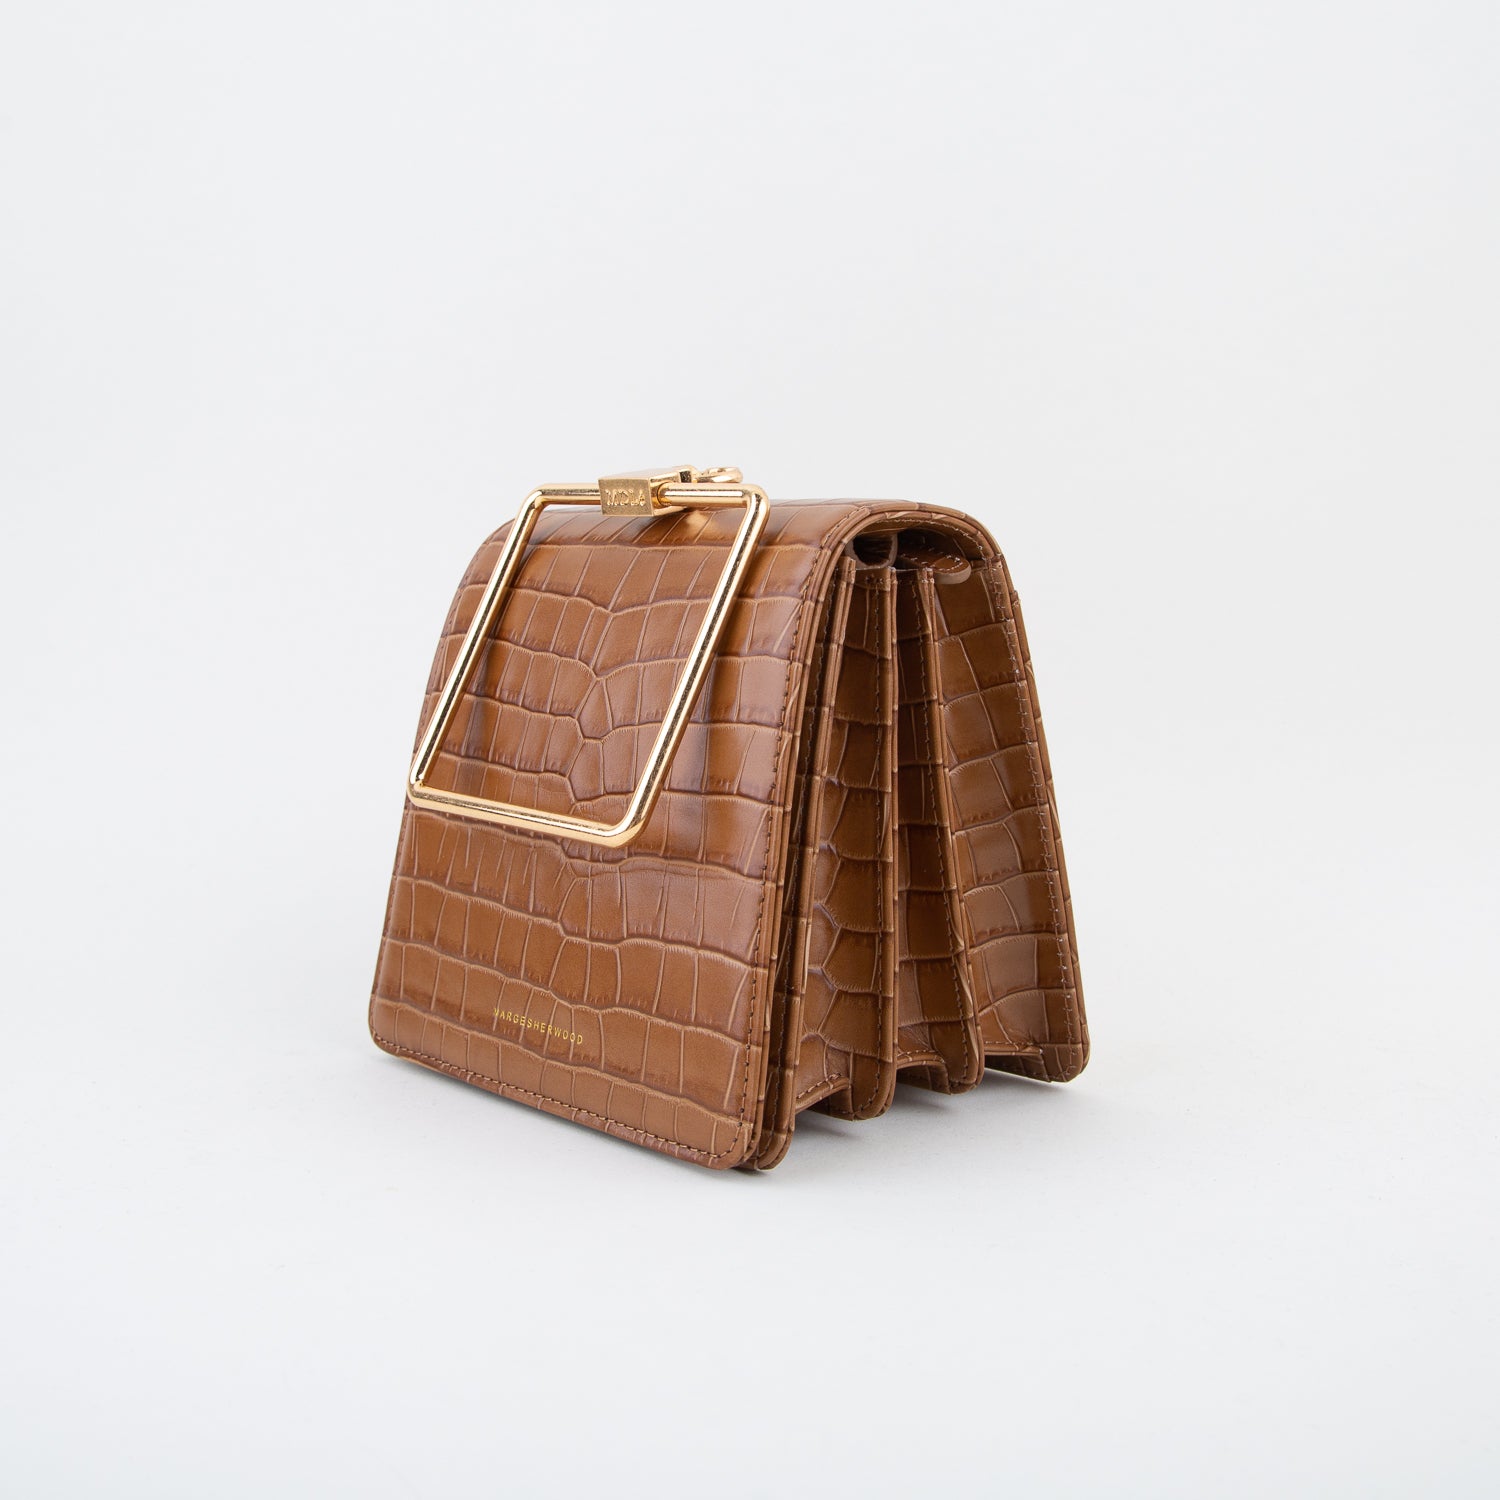 Marge Sherwood Pump Croc-Embossed Leather Top Handle Bag on SALE